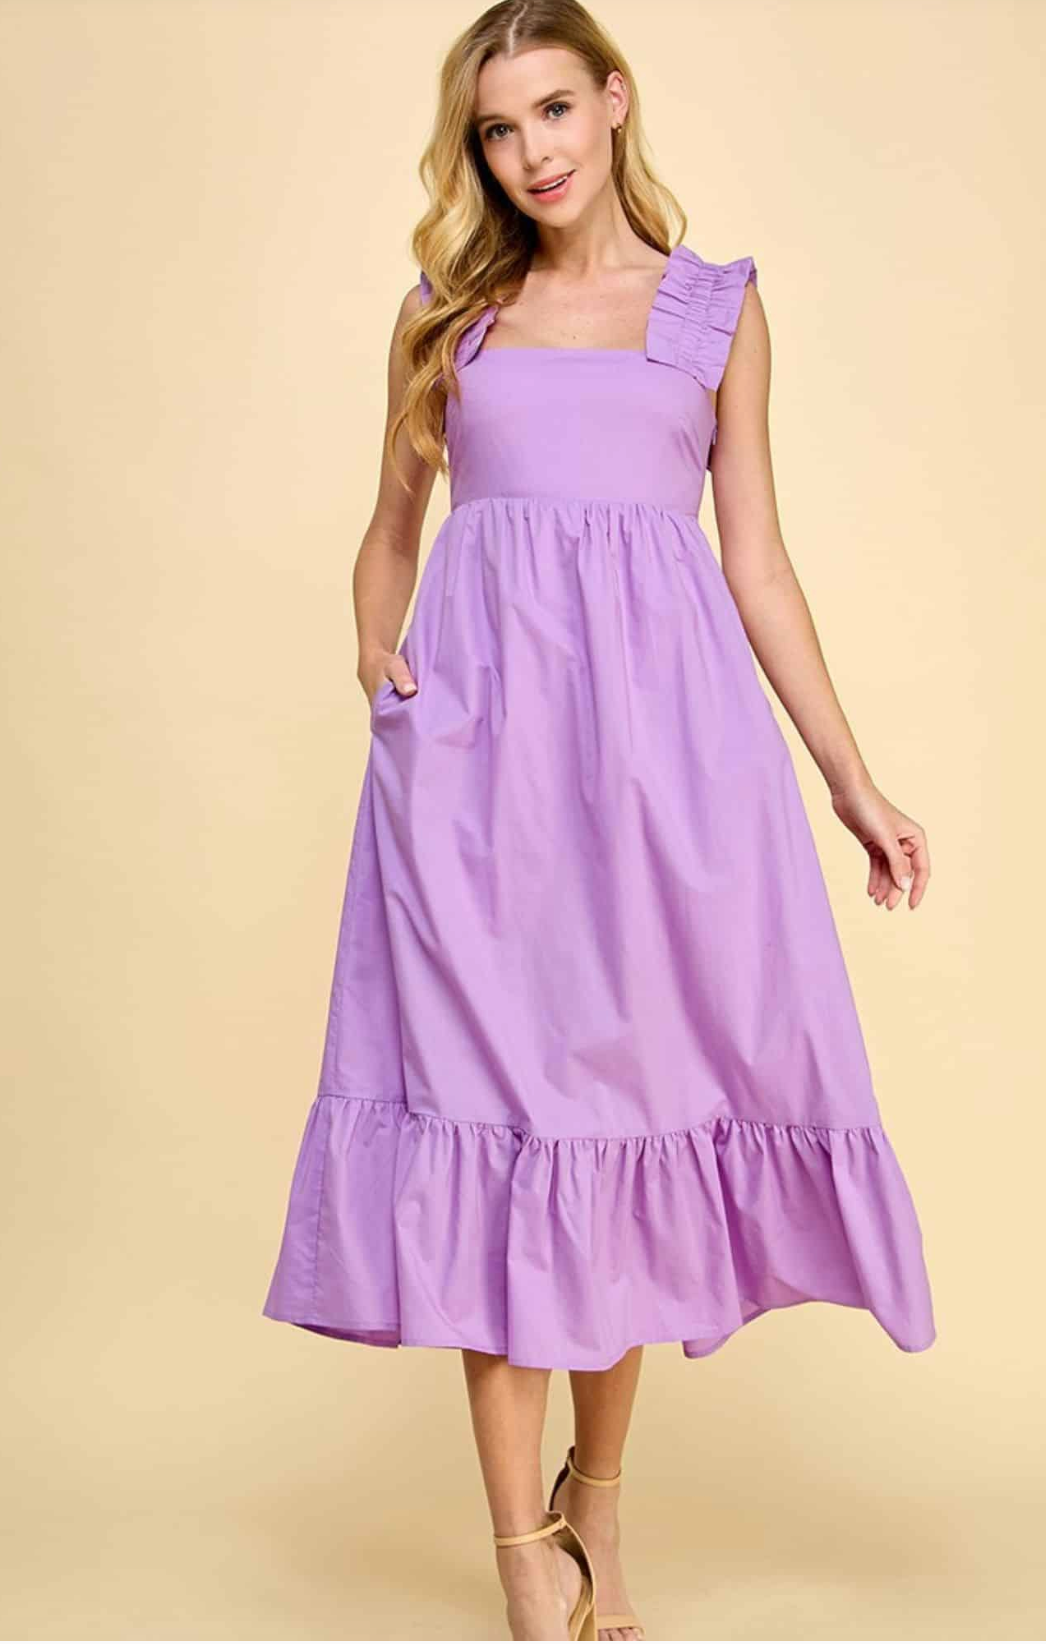 Lavender Baby Doll Dress